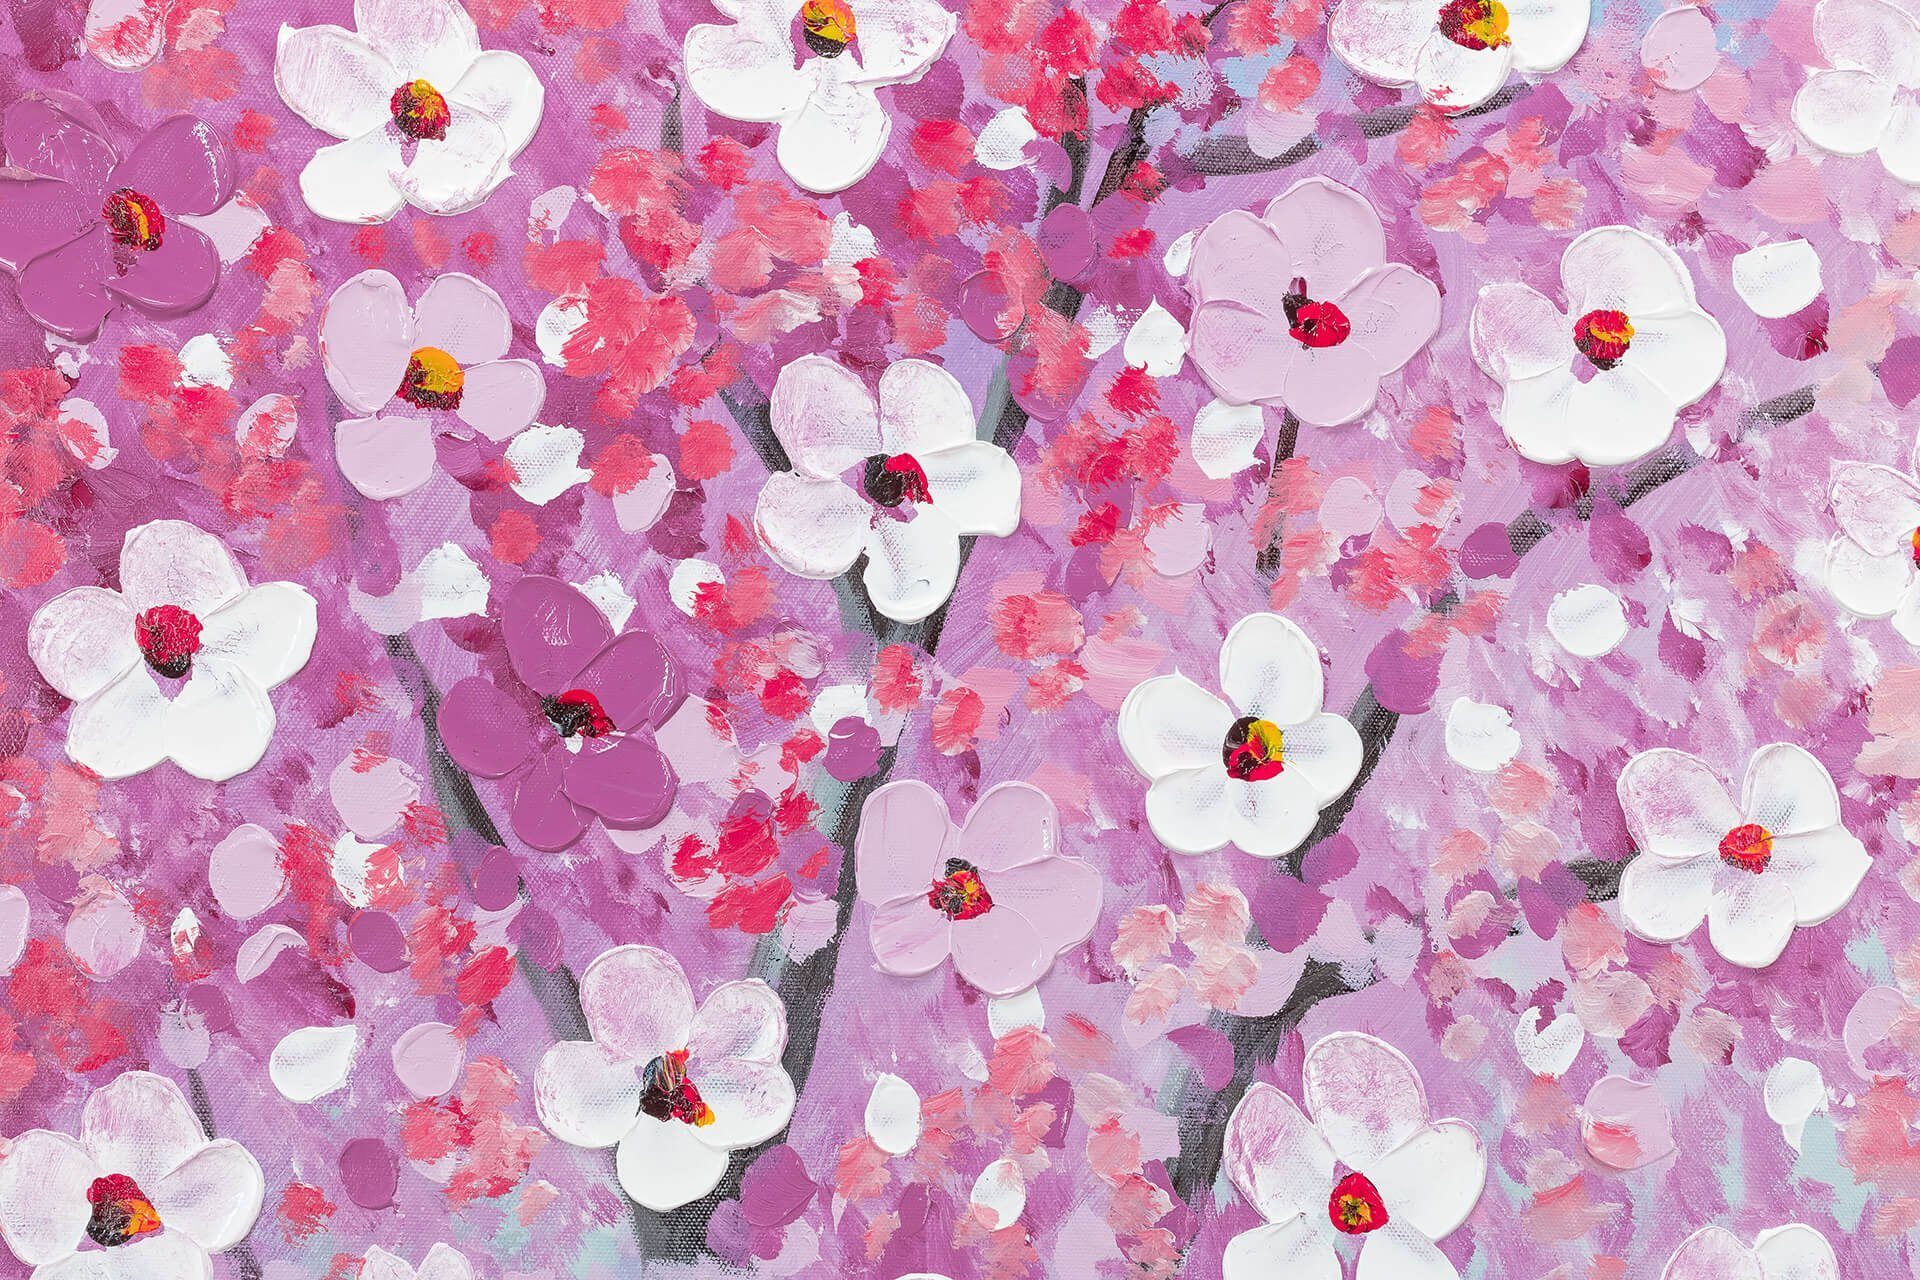 Wandbild 100% Leinwandbild Gemälde Wohnzimmer Flower 60x90 cm, KUNSTLOFT HANDGEMALT Tale